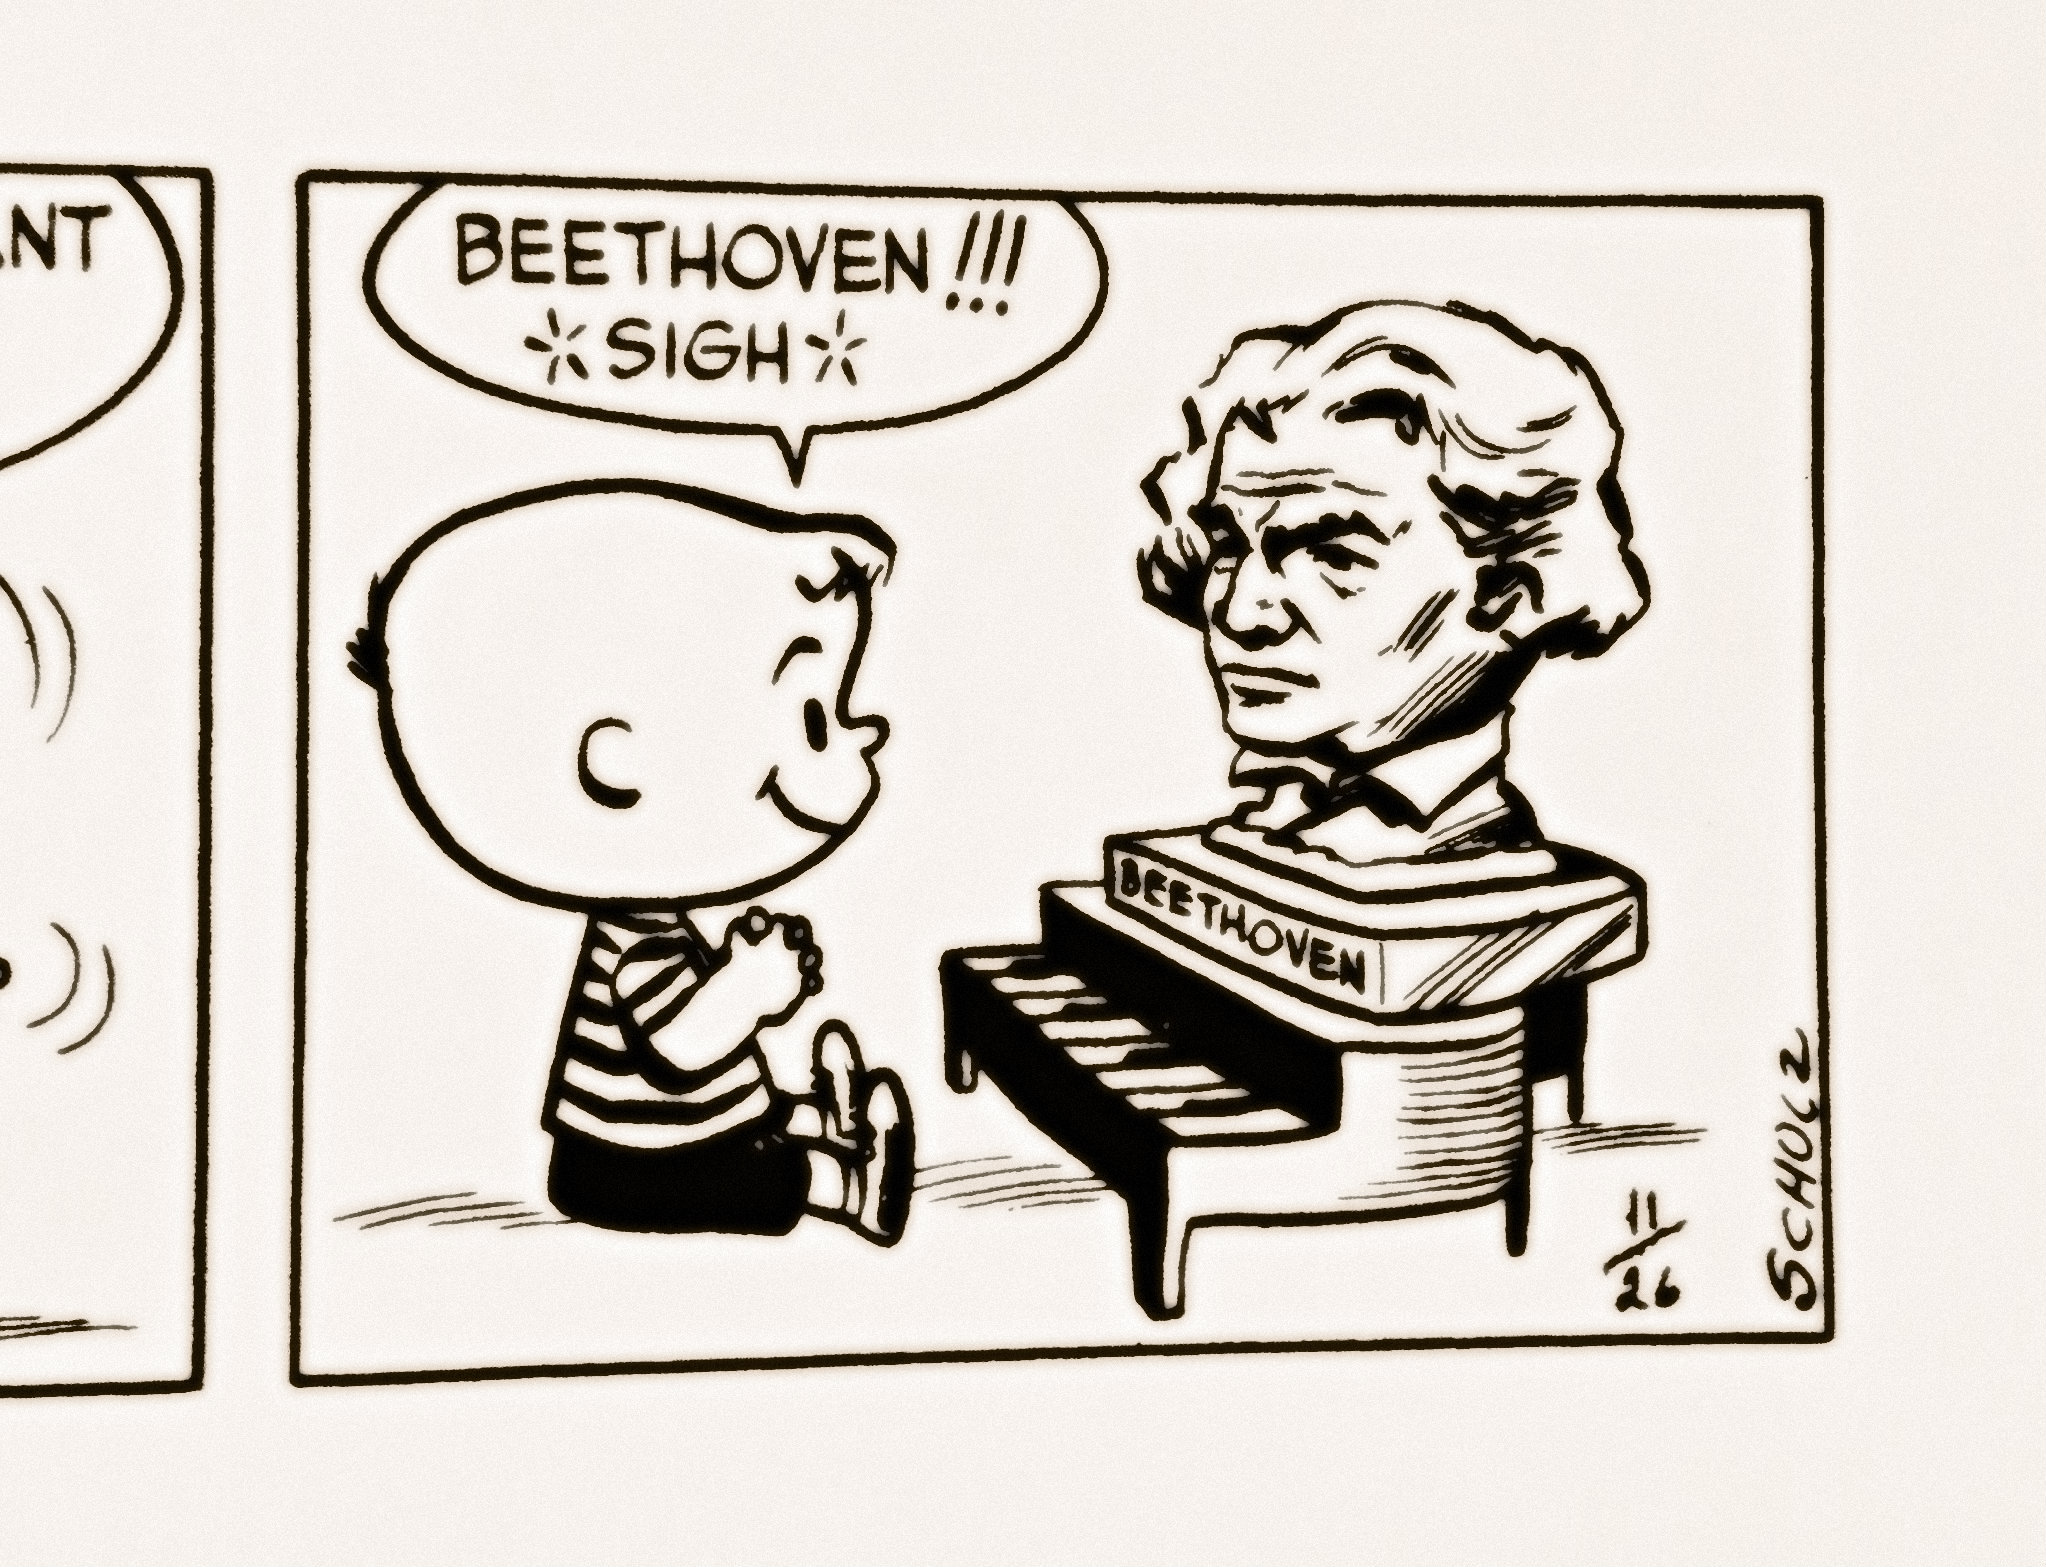 Photo: Peanuts Beethoven bust